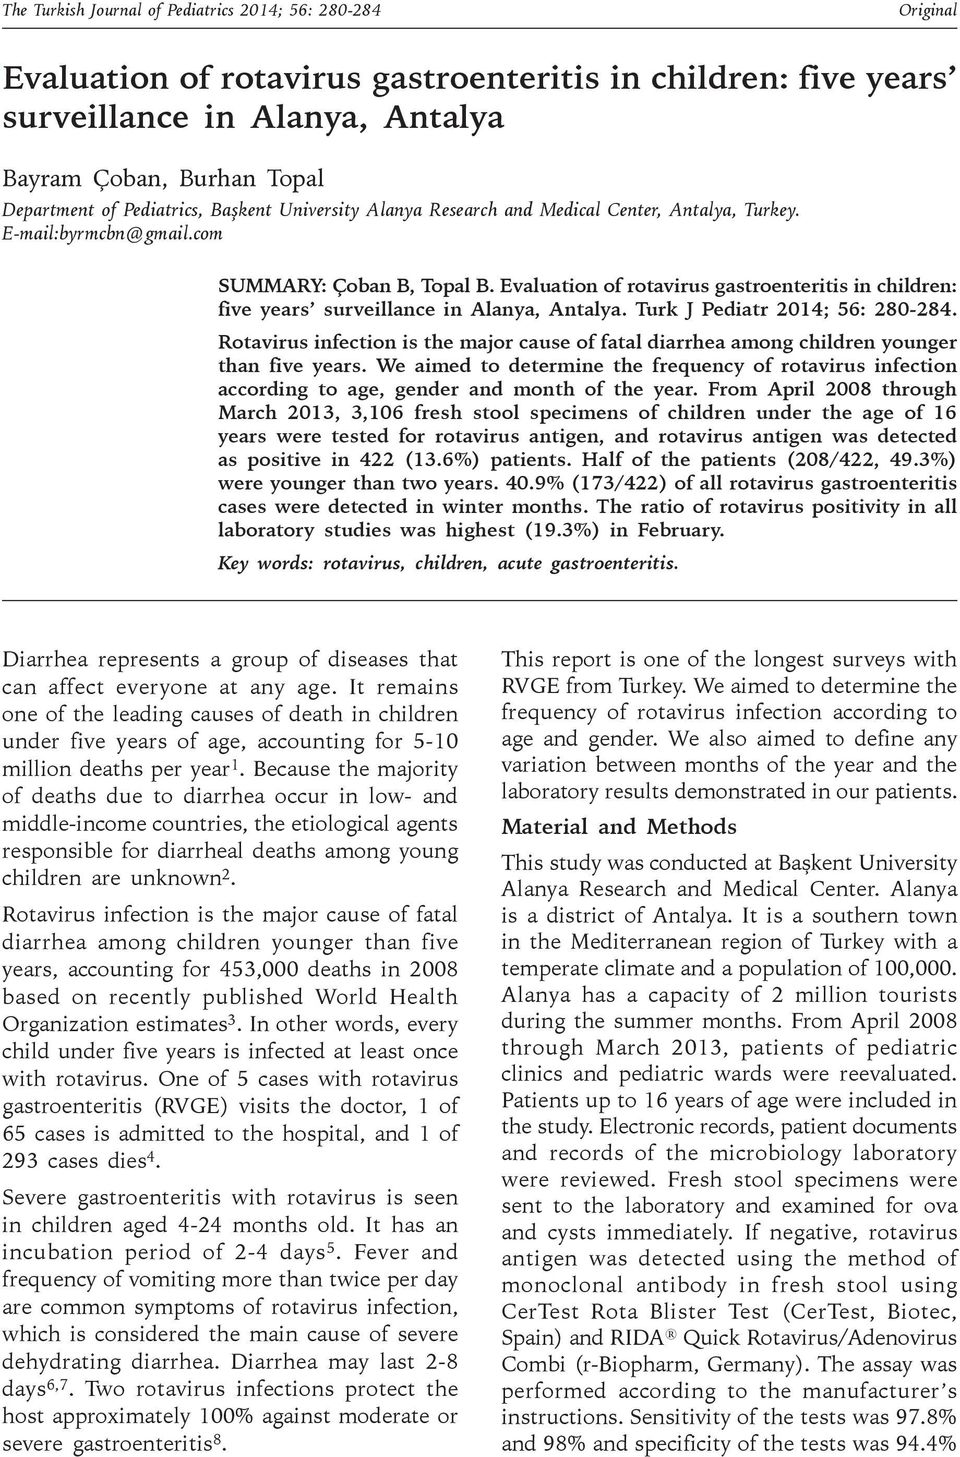 Evaluation of rotavirus gastroenteritis in children: five years surveillance in Alanya, Antalya. Turk J Pediatr 2014; 56: 280-284.